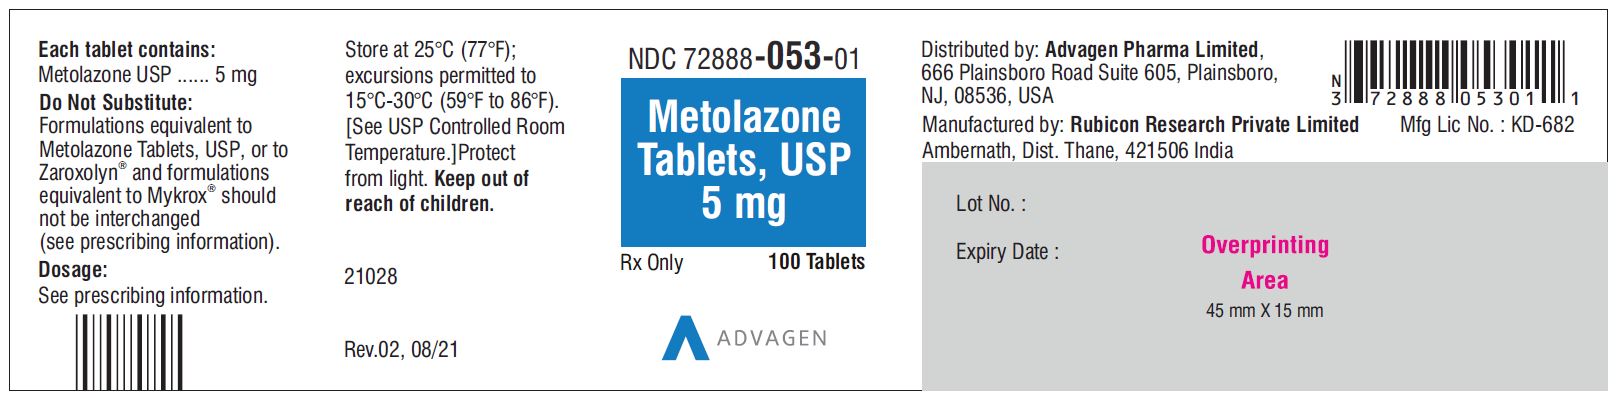 Metolazone Tablets USP, 5mg - NDC 72888-053-01 - 100 Tablets Bottle Label